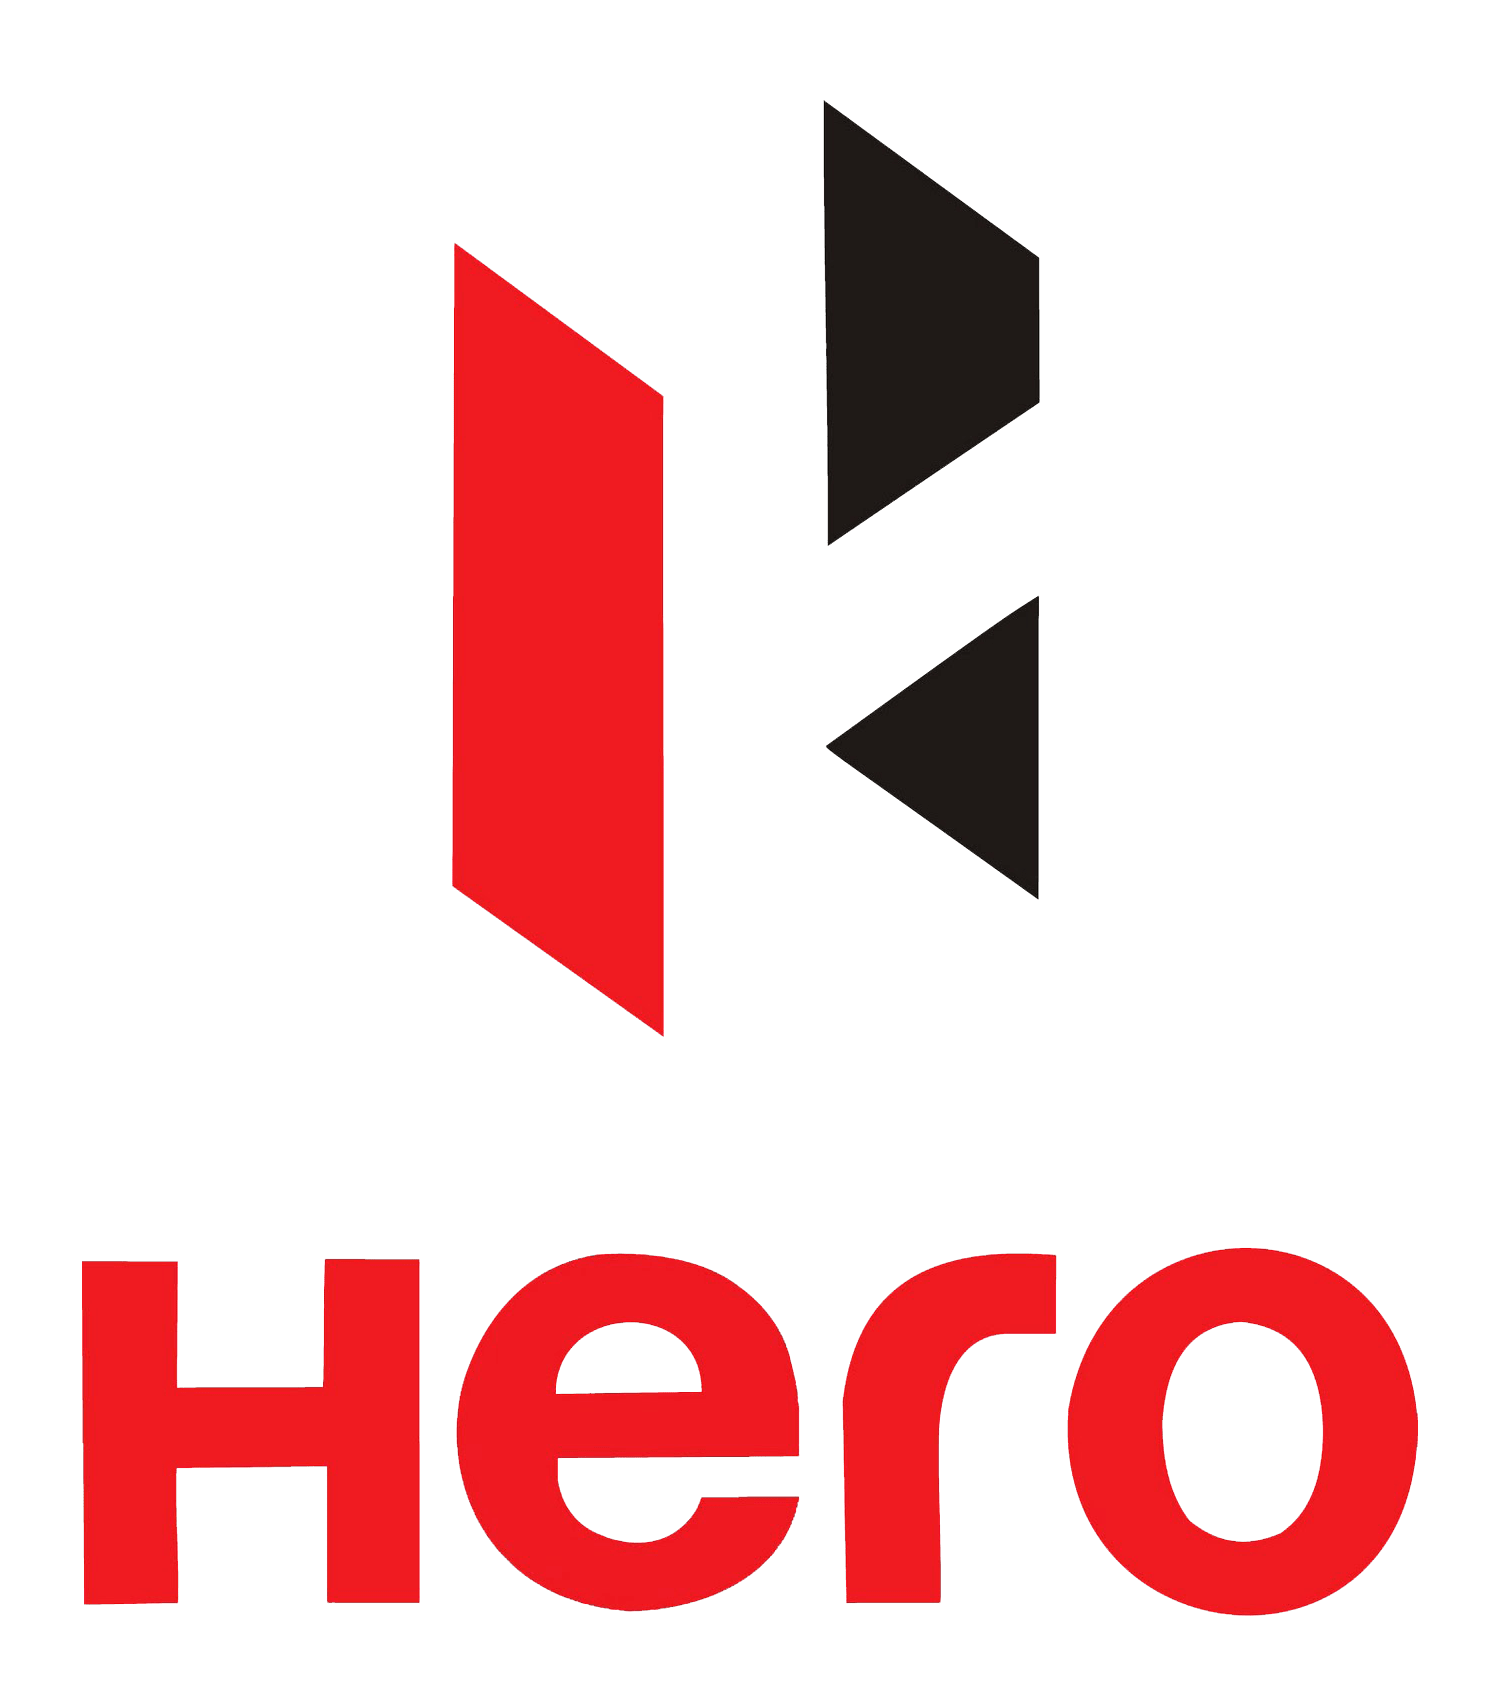 Motorcycle Company Logo - Hero logo | Motorcycle Brands